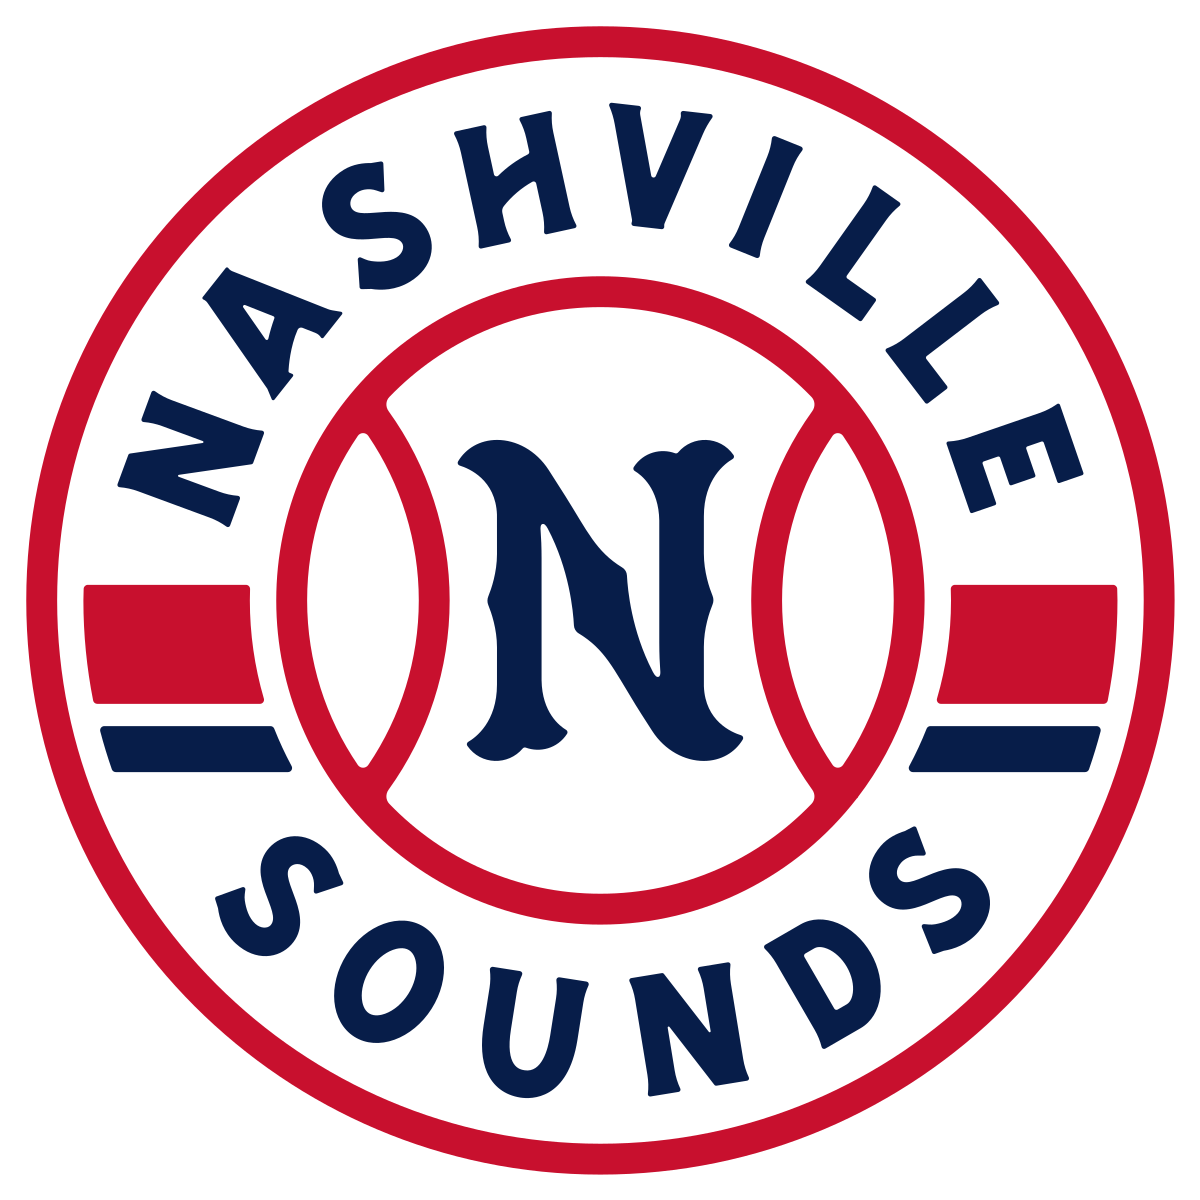 Nashville Sounds partner with StellarAlgo to prepare for 2023 season